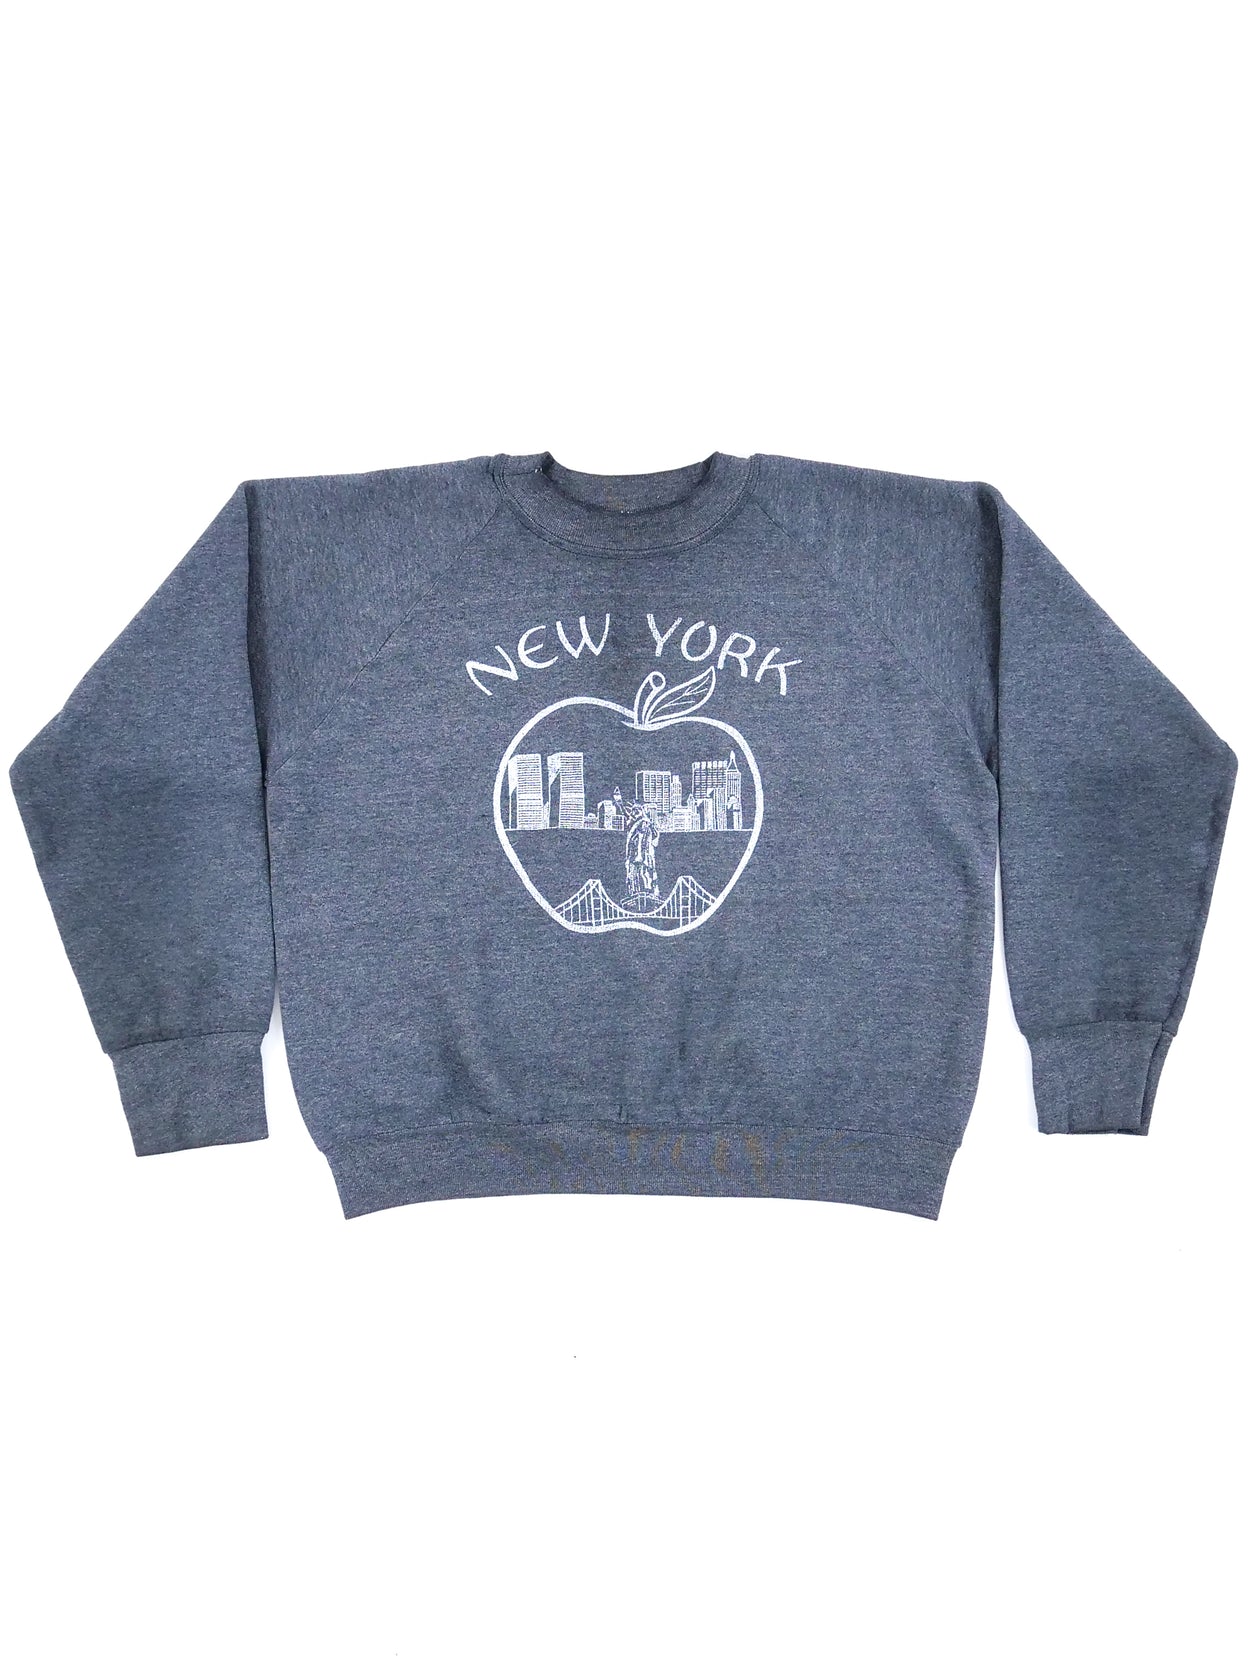 Vintage 80s 90s New York City Manhattan Big Apple Sweatshirt Medium